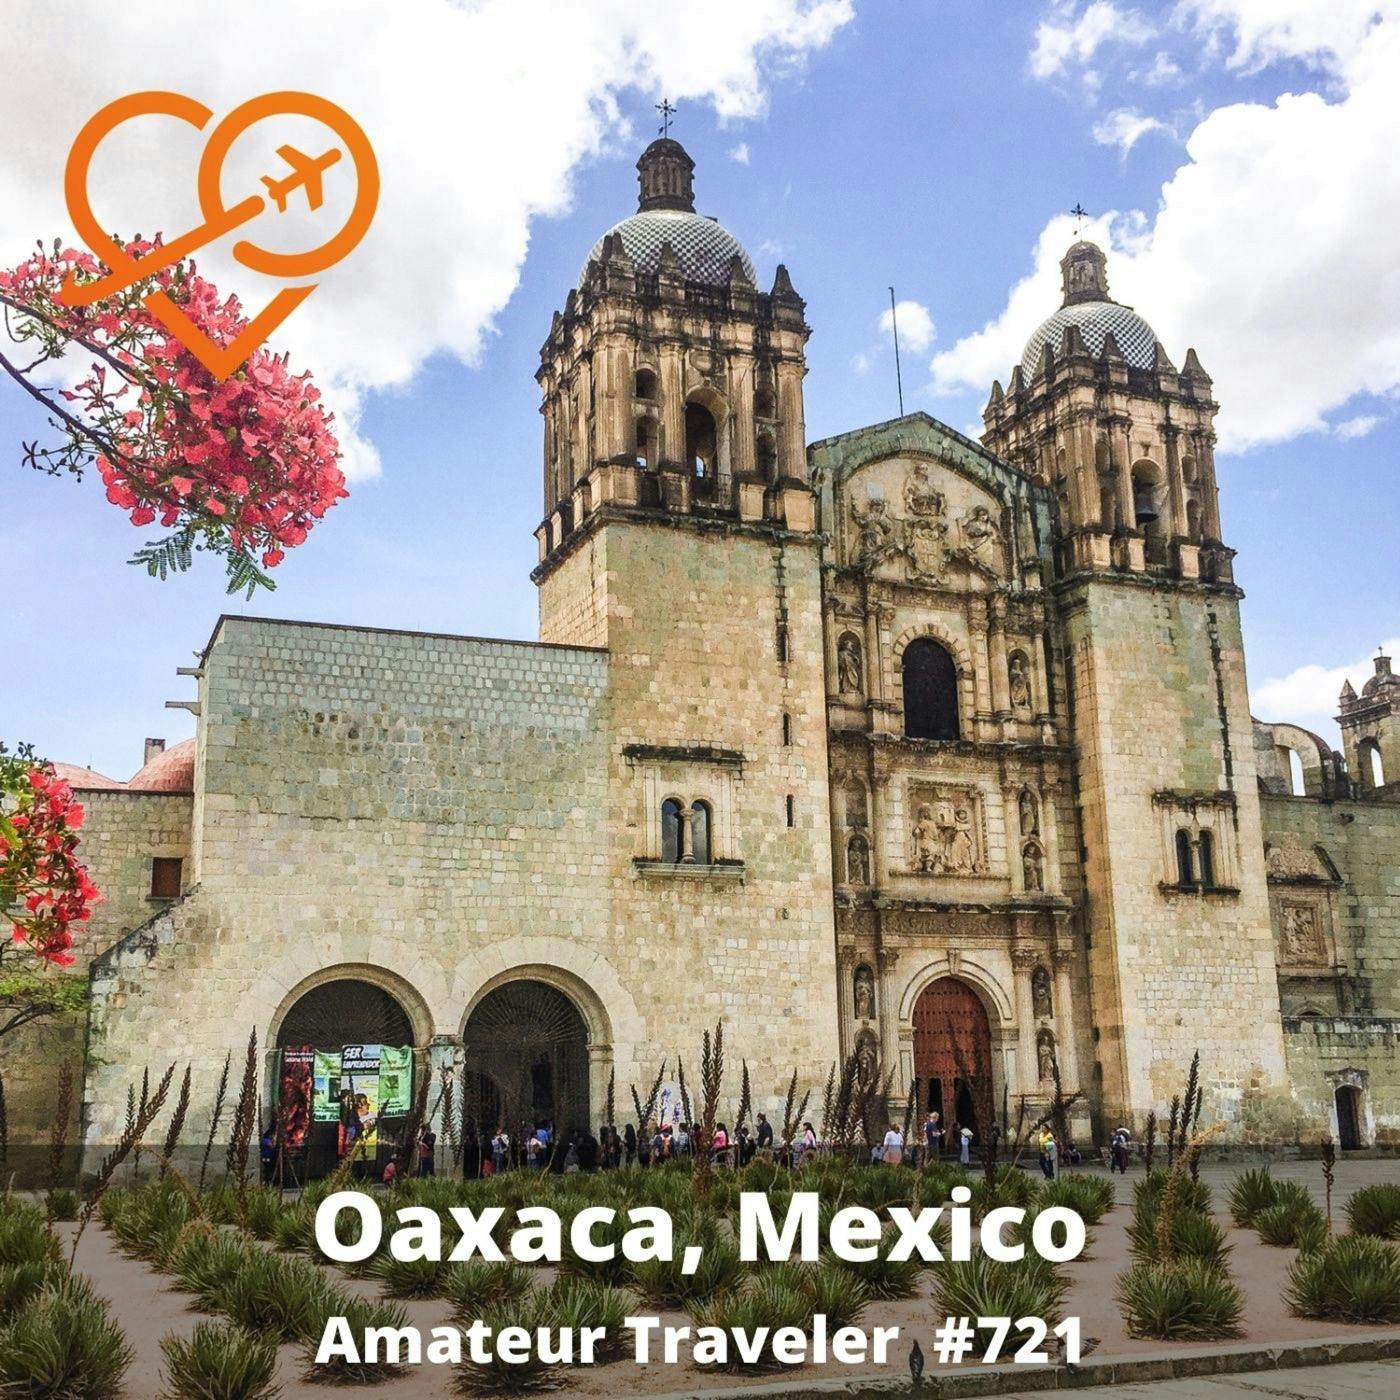 AT#721 - Travel to Oaxaca